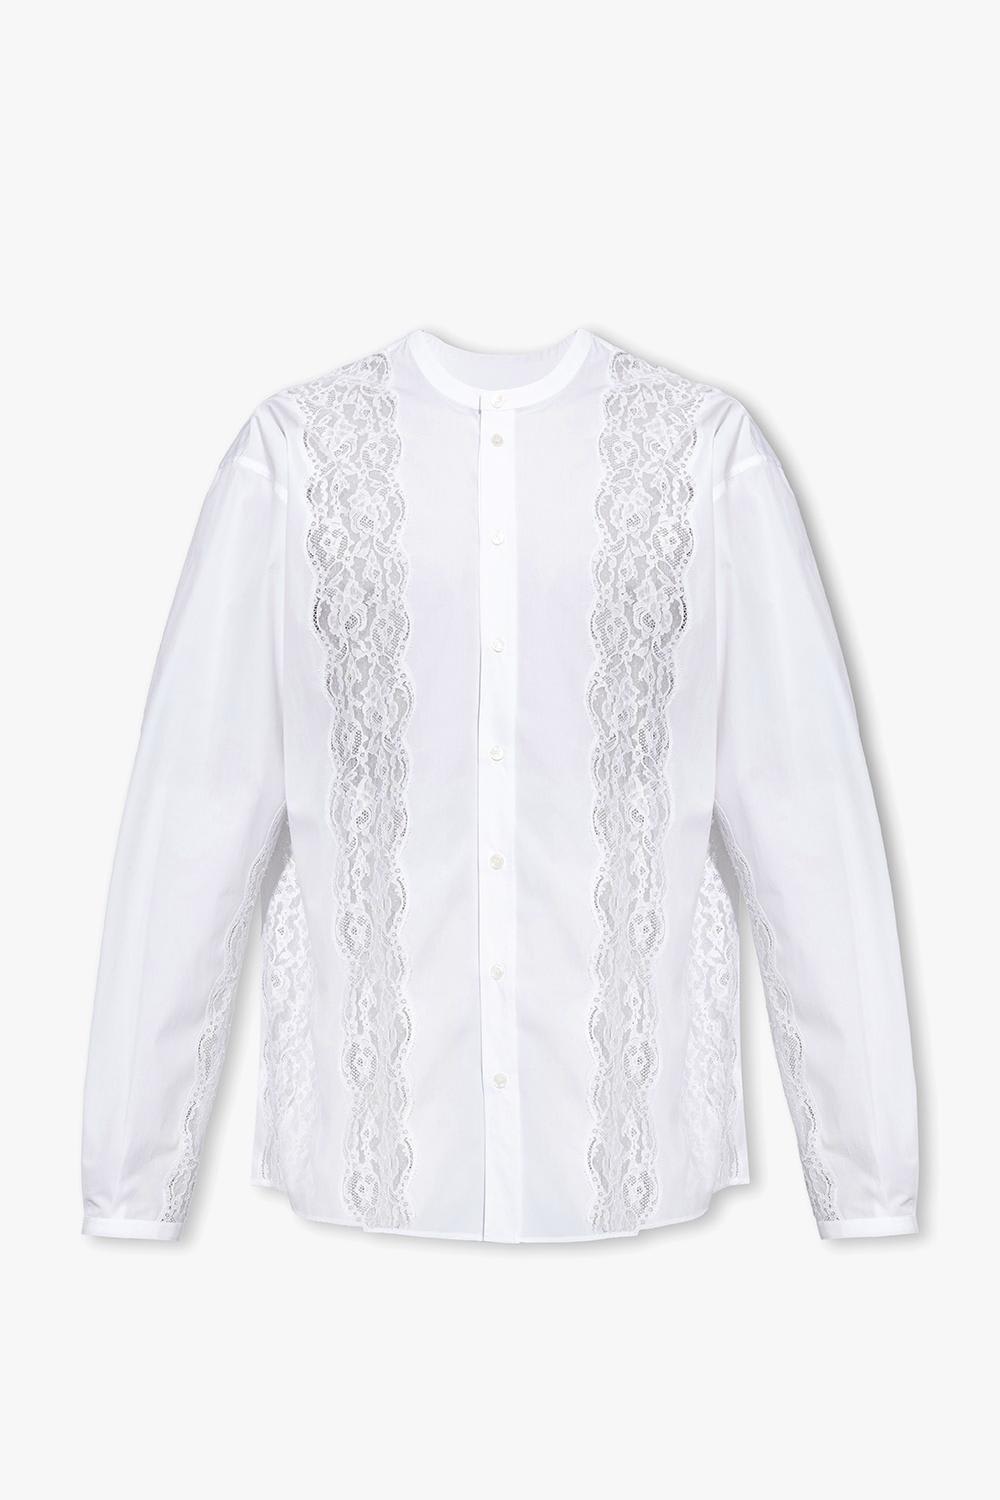 Dolce & Gabbana Lace-trimmed Shirt